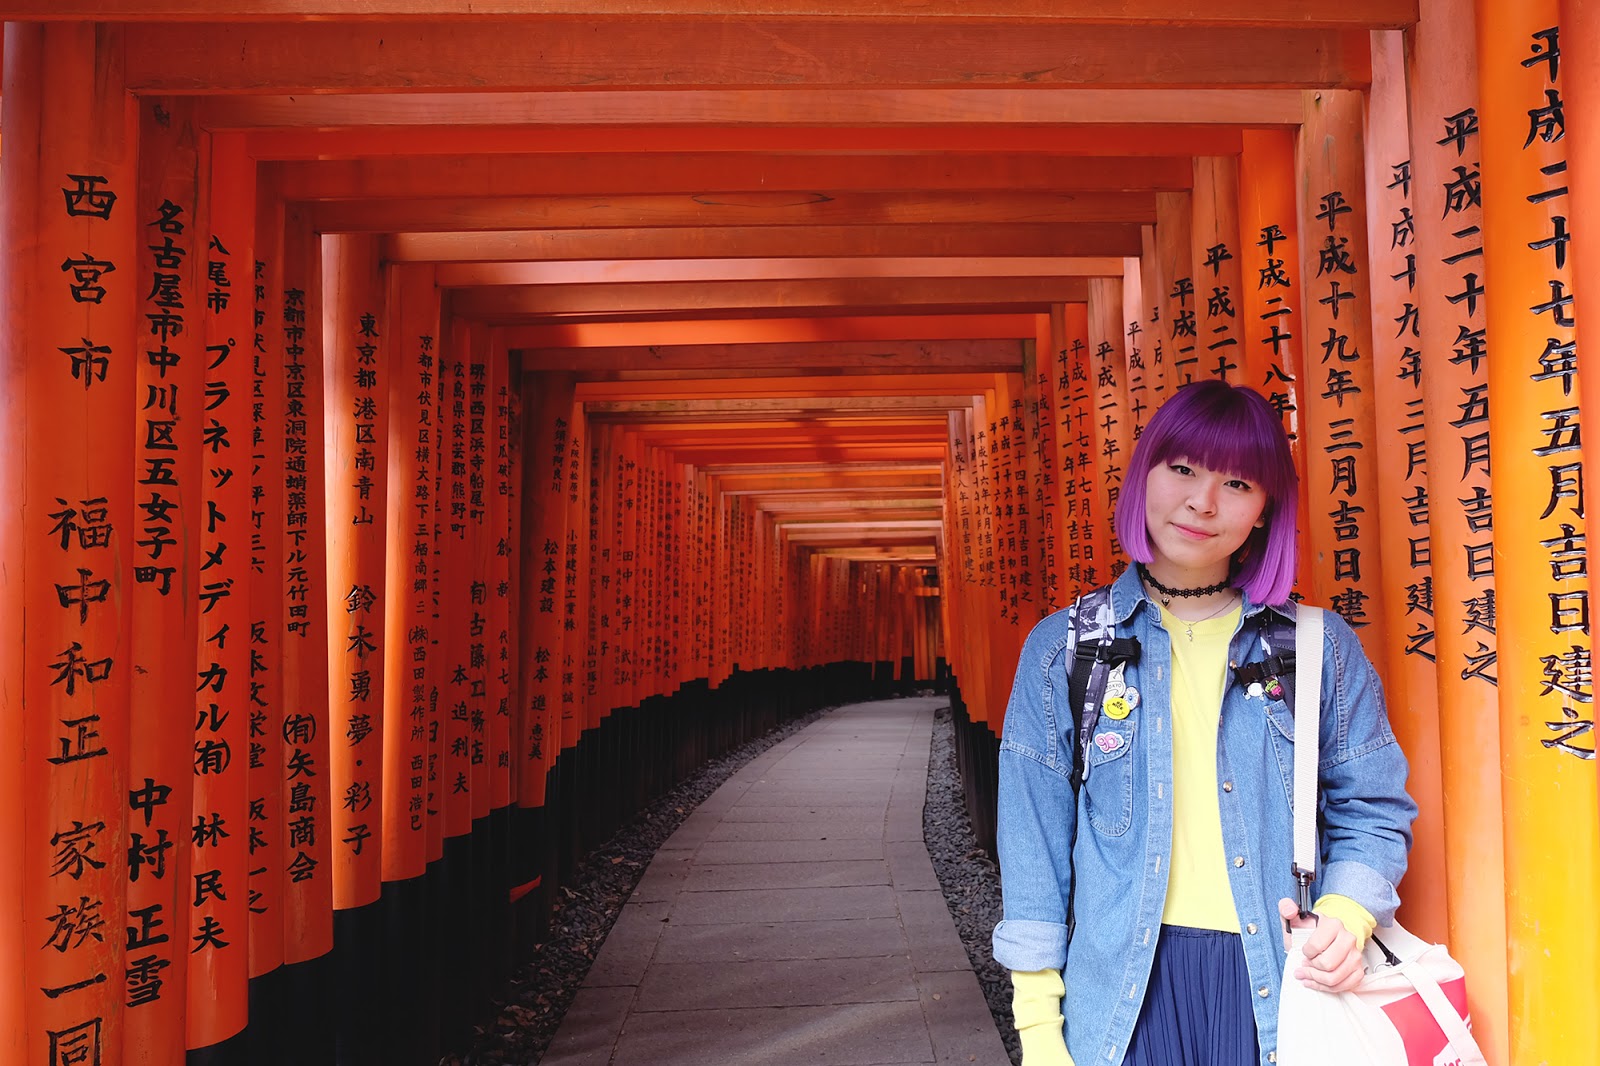 Useful Japan Travel Tips You Should Know - Fushimi Inari Kyoto | www.bigdreamerblog.com